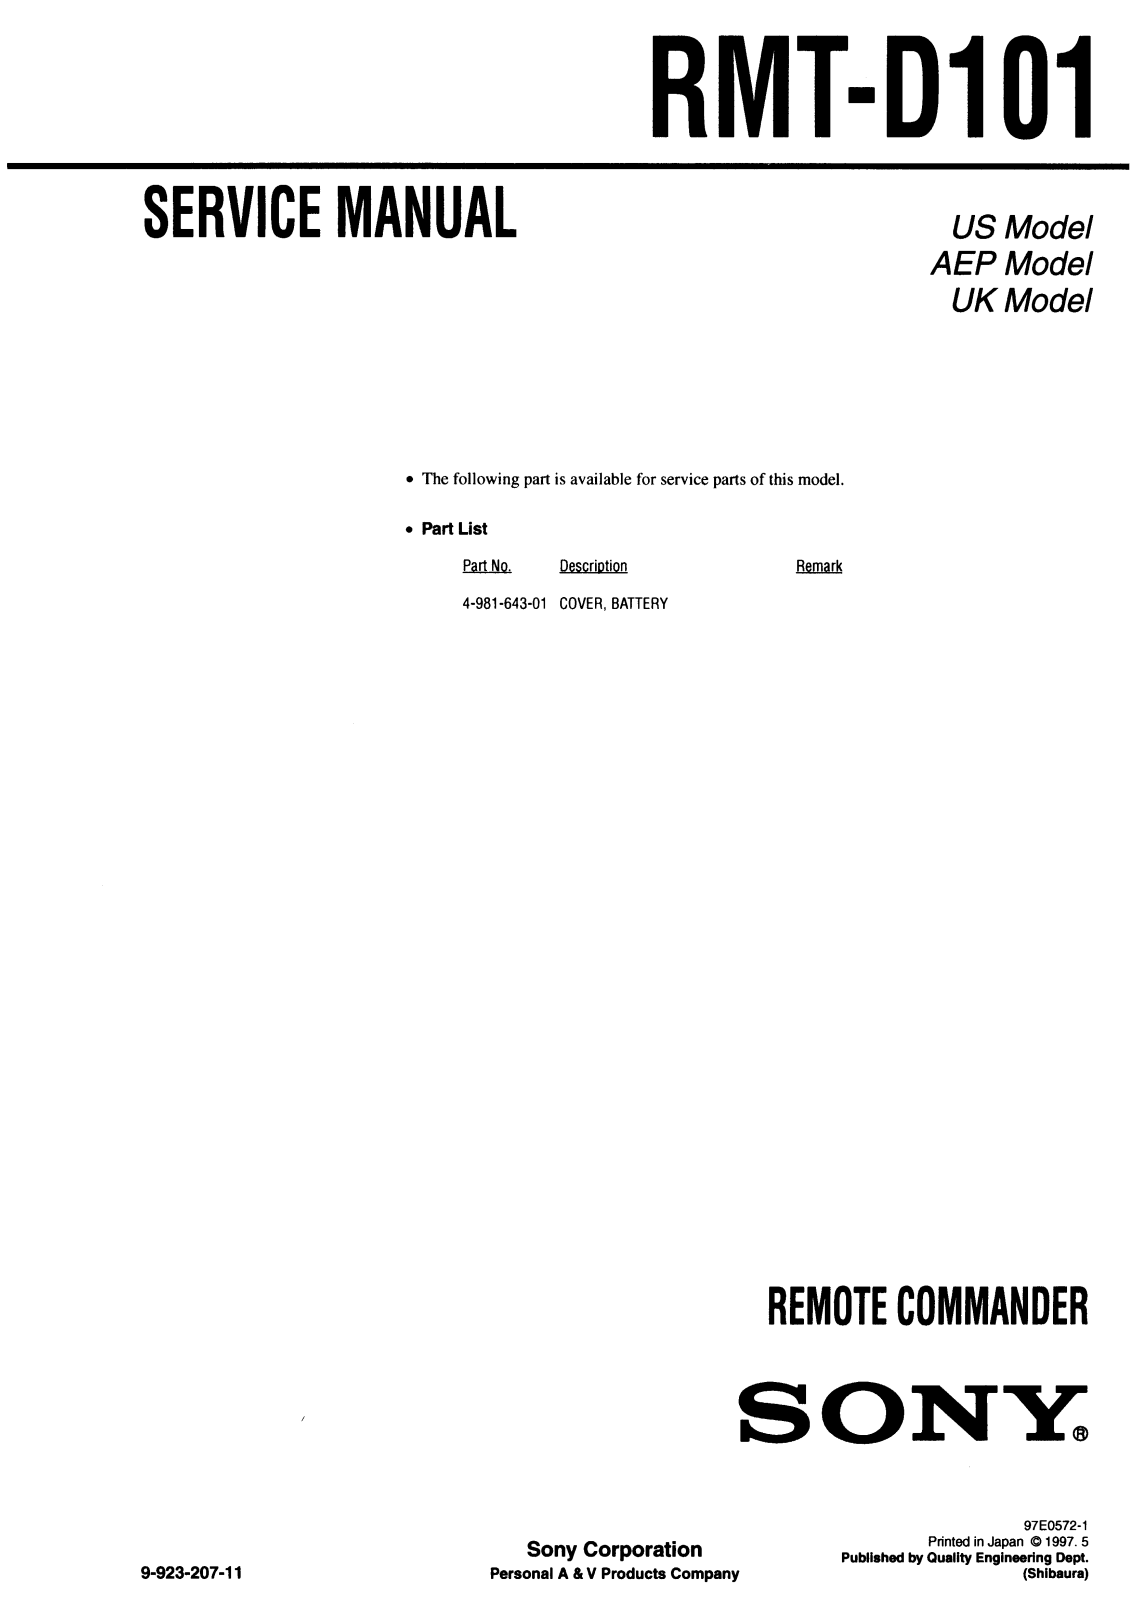 Sony RMT-D101 Service Manual